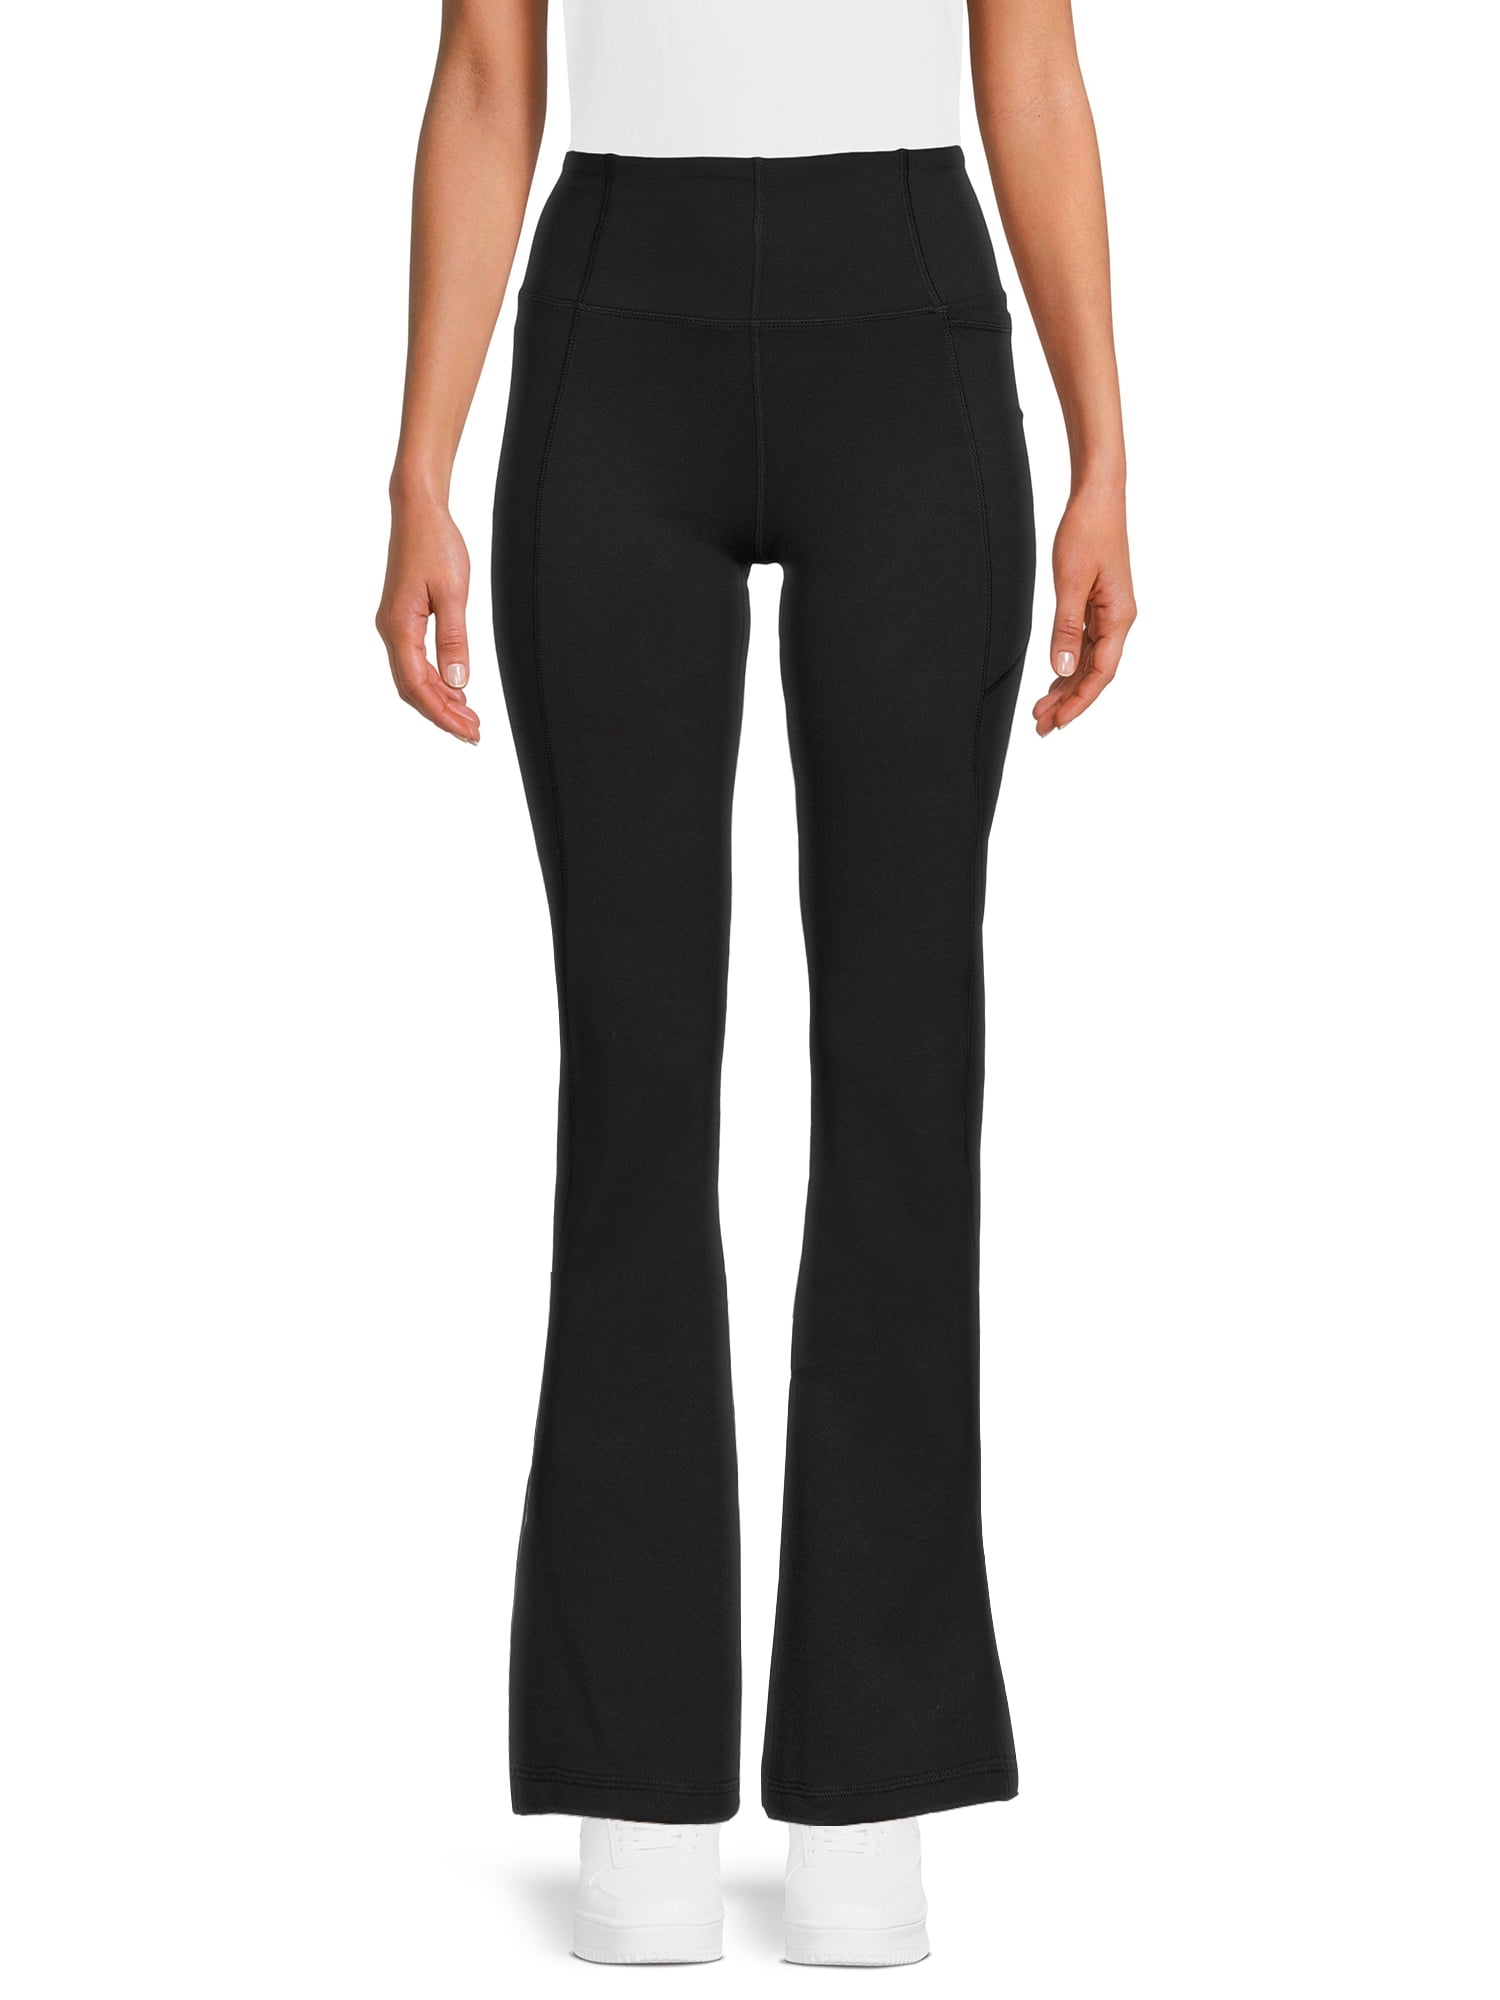 Avia Women's Outdoor Performance Pants, 28.5” Inseam, Sizes XS-3X 